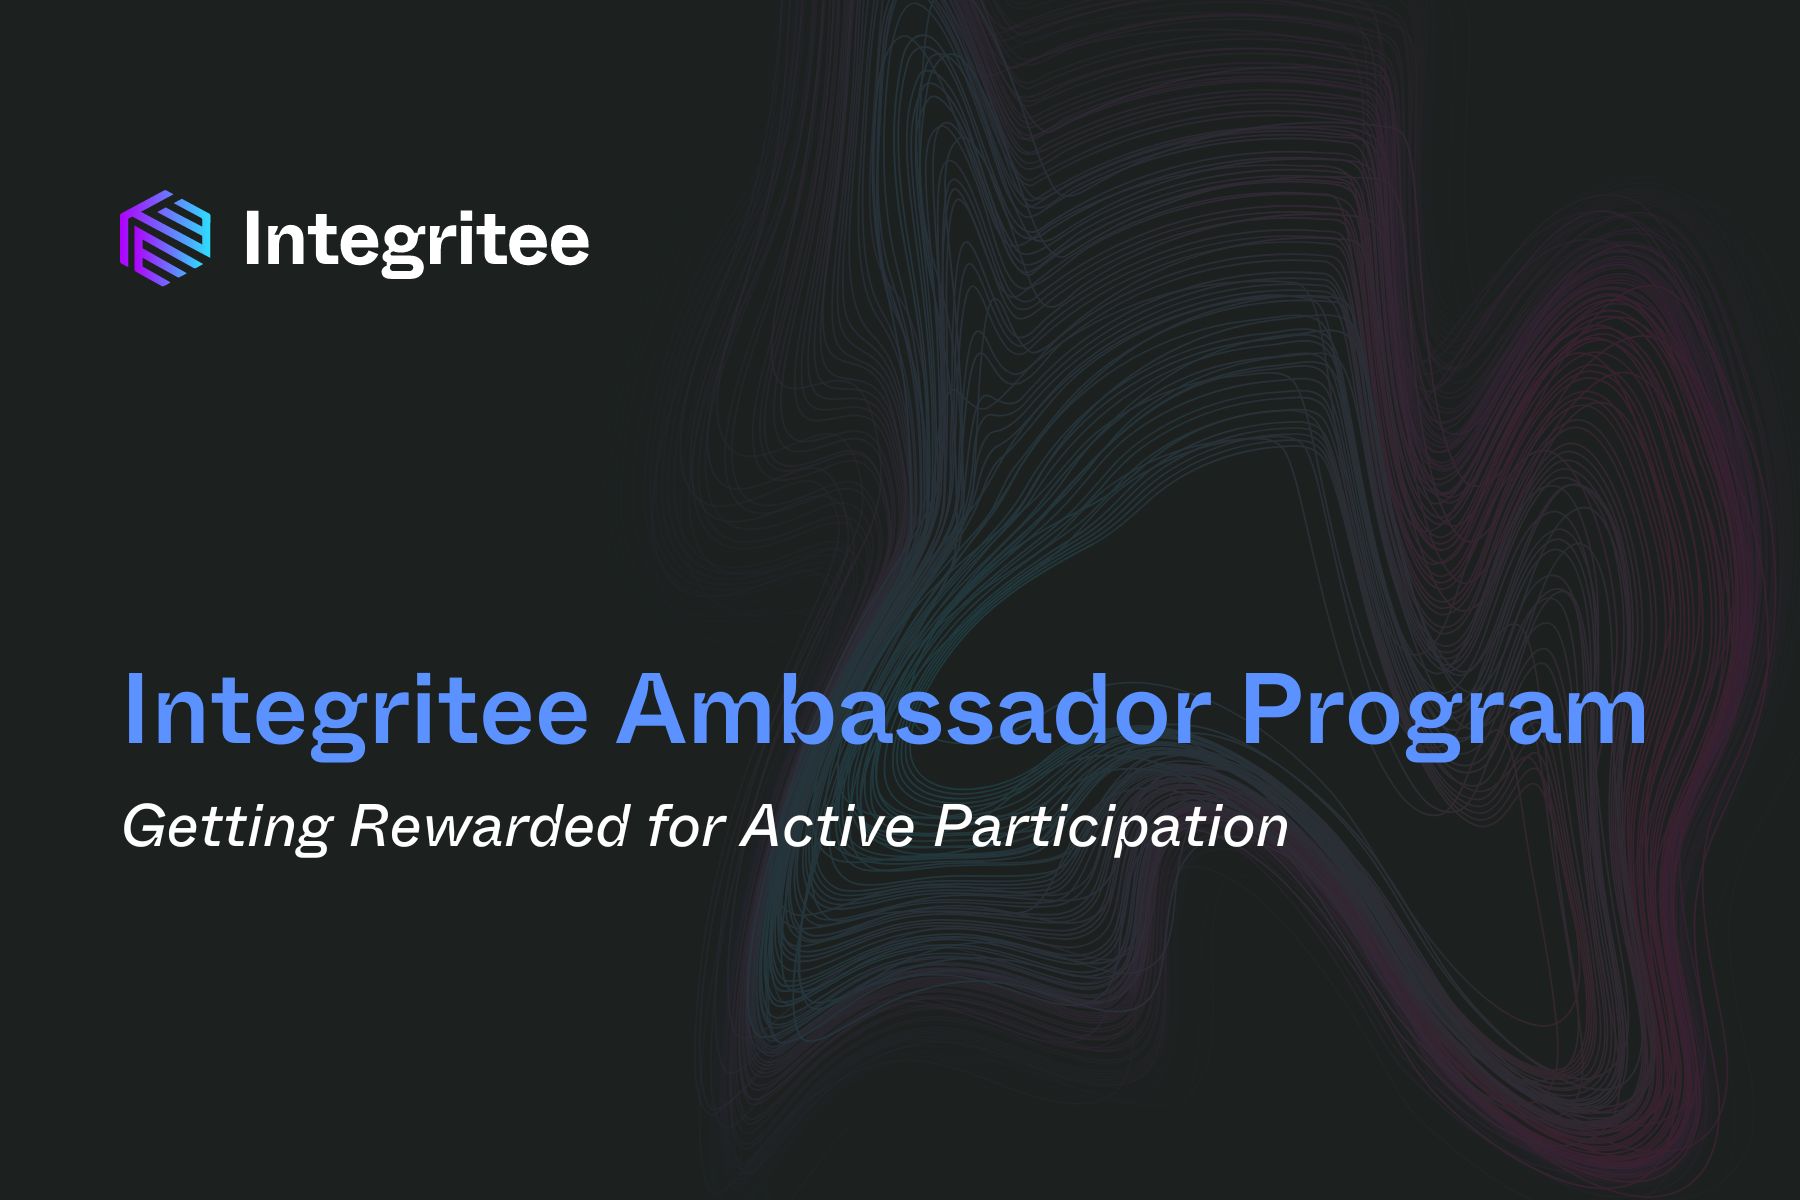 Introducing the Integritee Ambassador Program